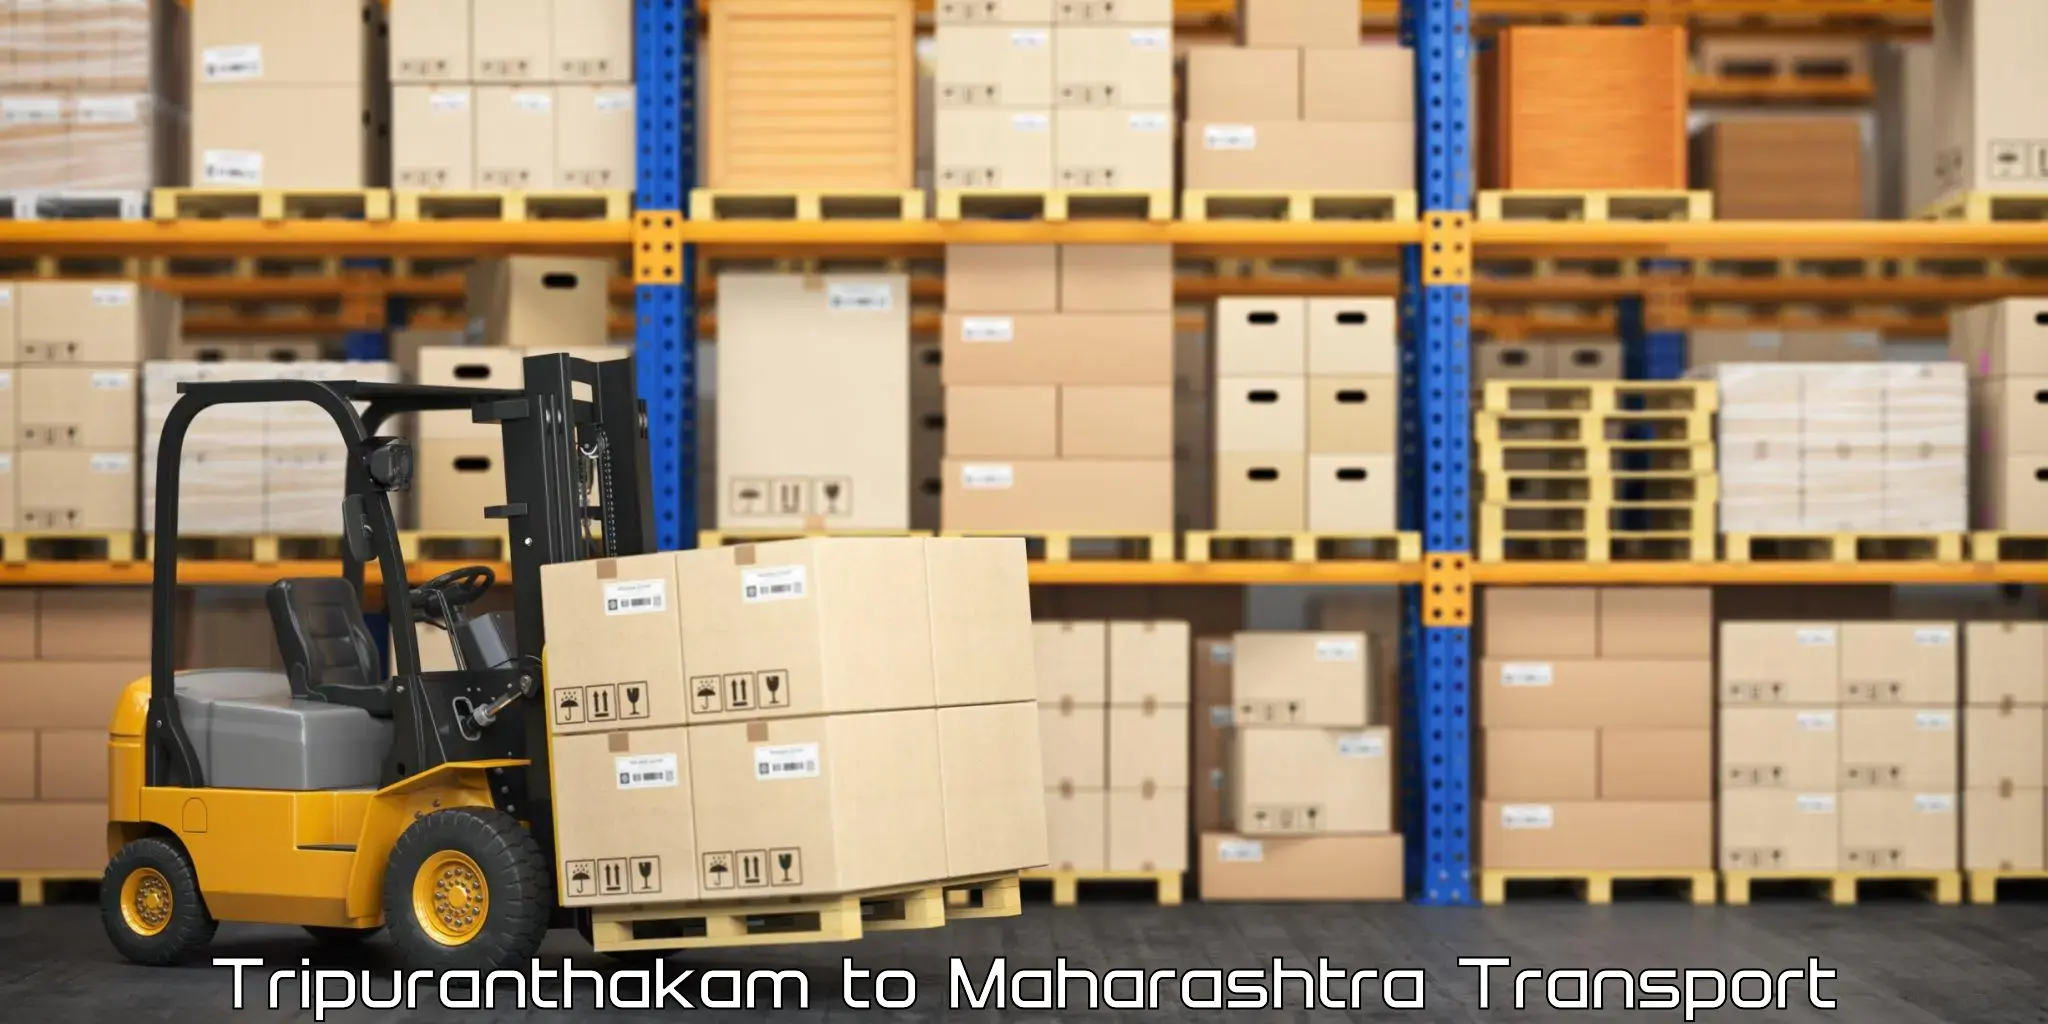 Truck transport companies in India Tripuranthakam to Ojhar